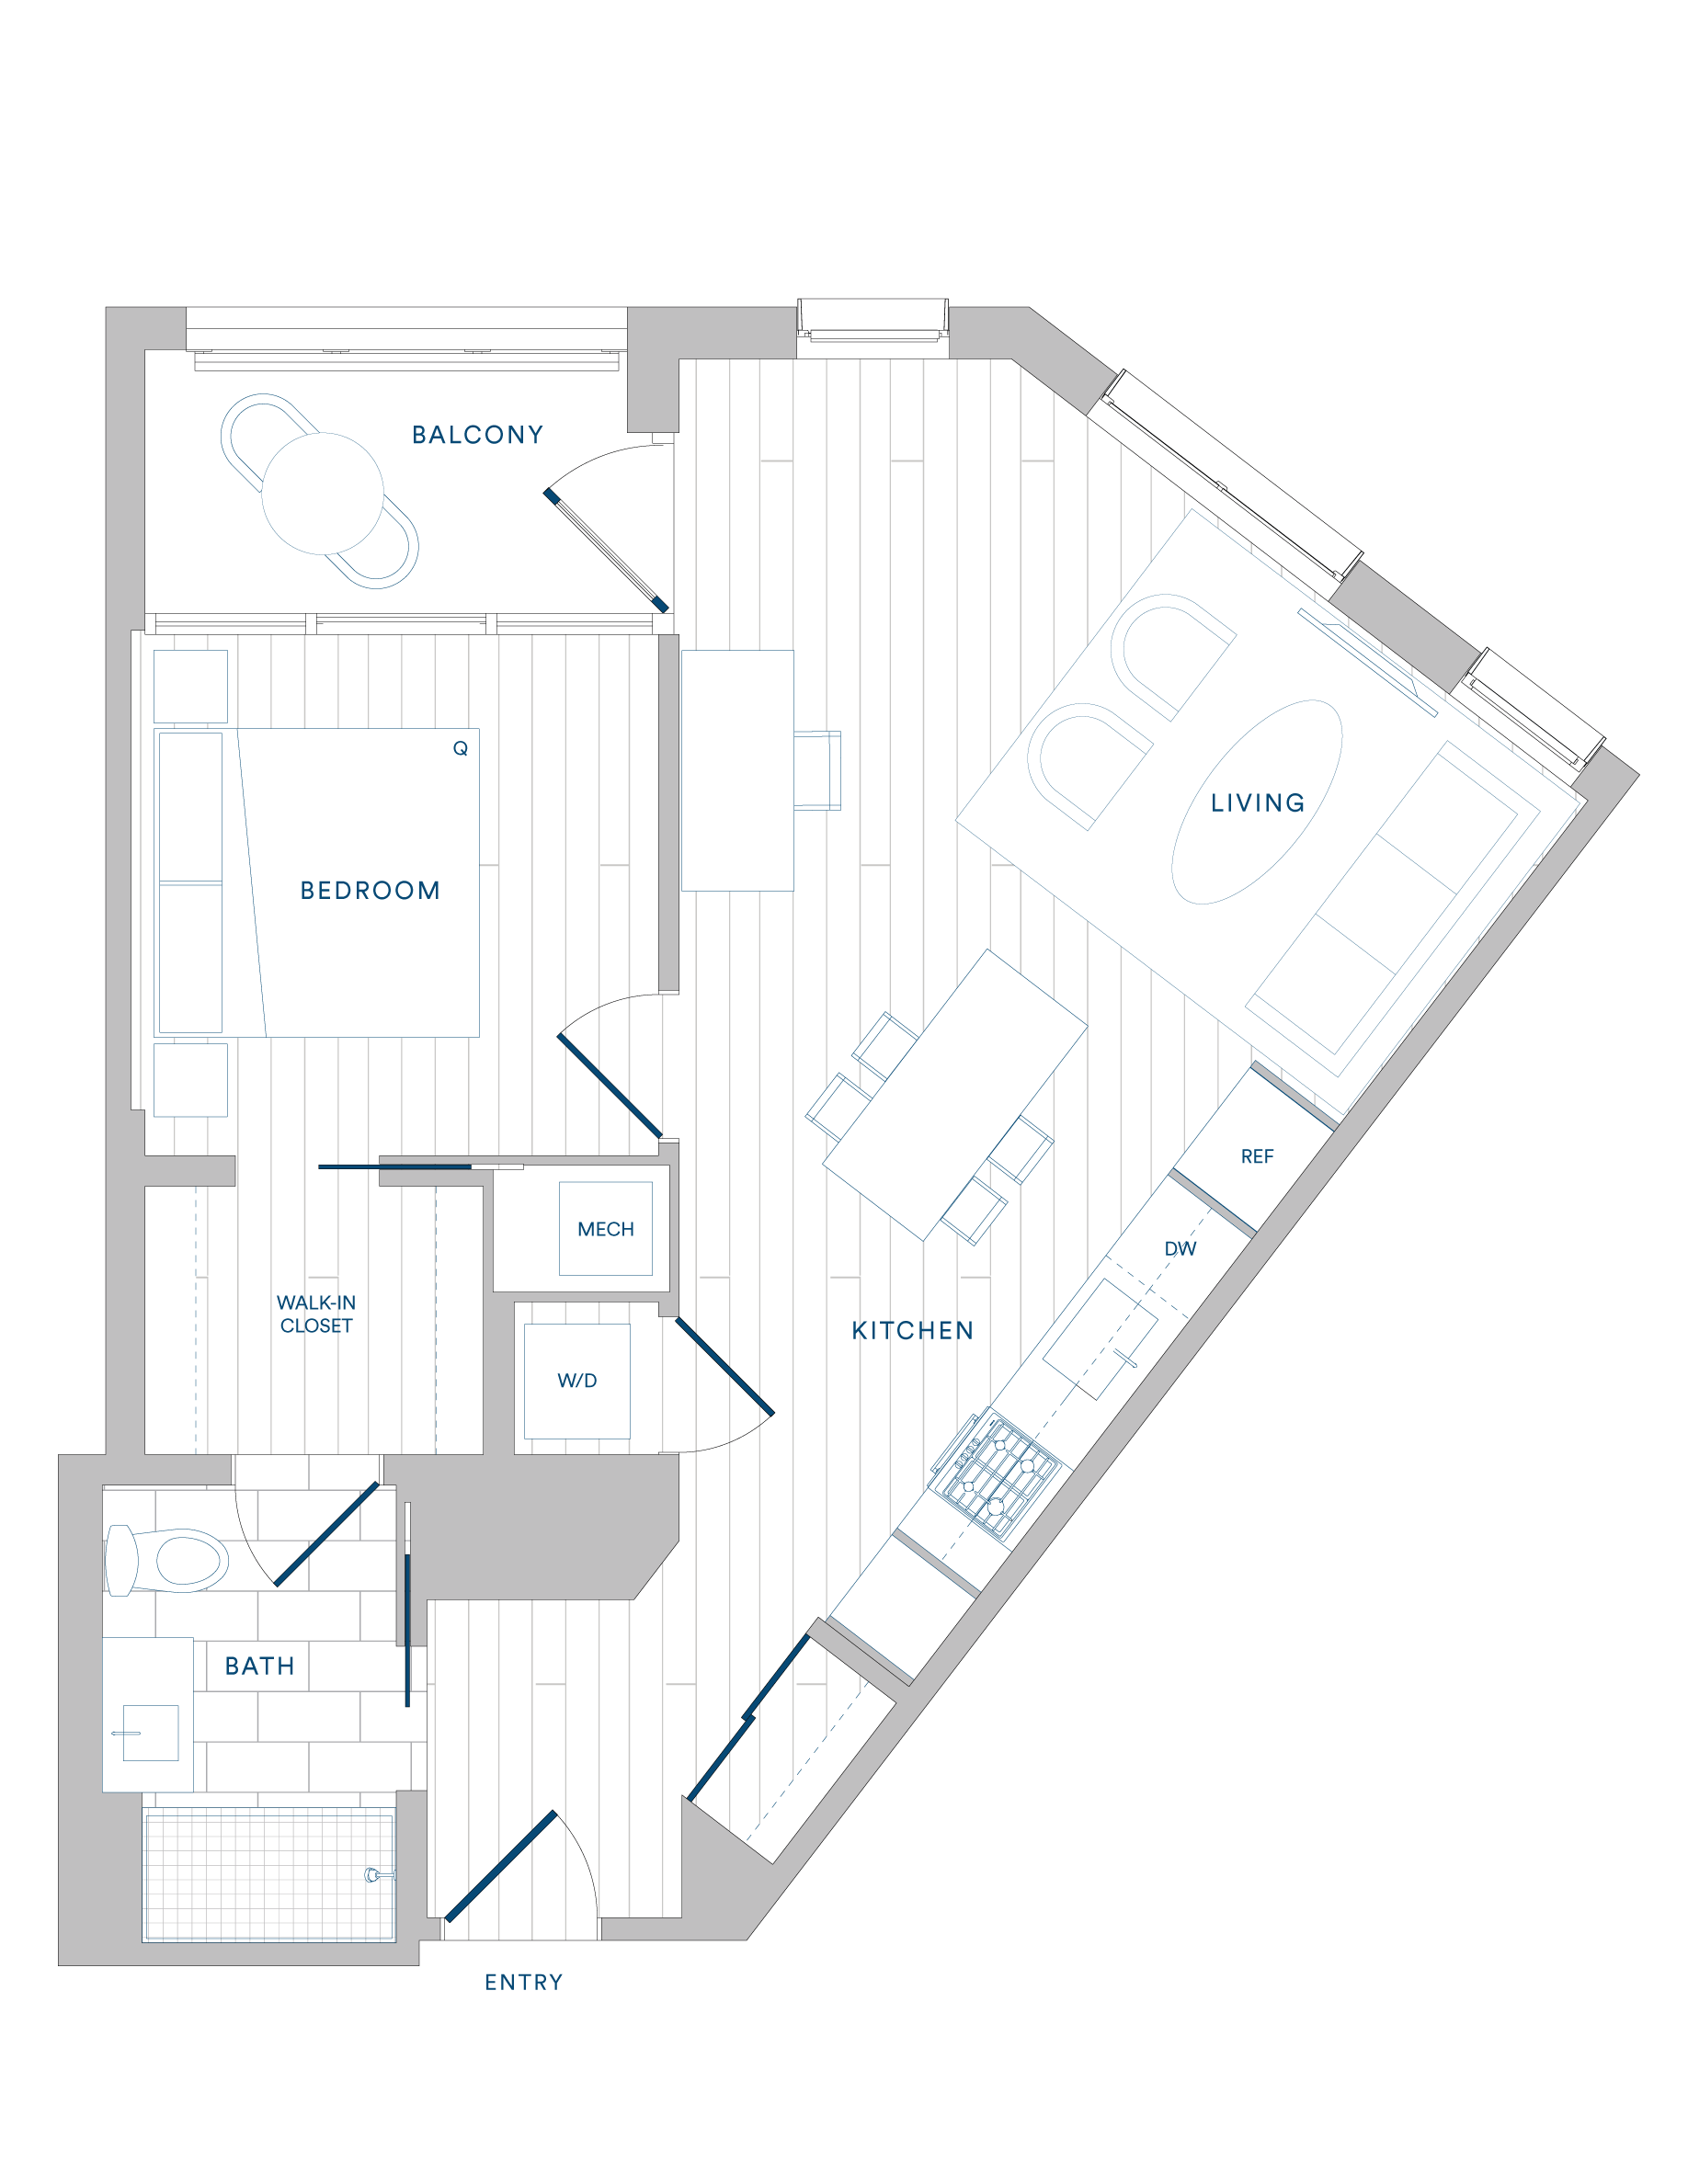 Floorplan for Apartment #1007, 1 bedroom unit at Margarite